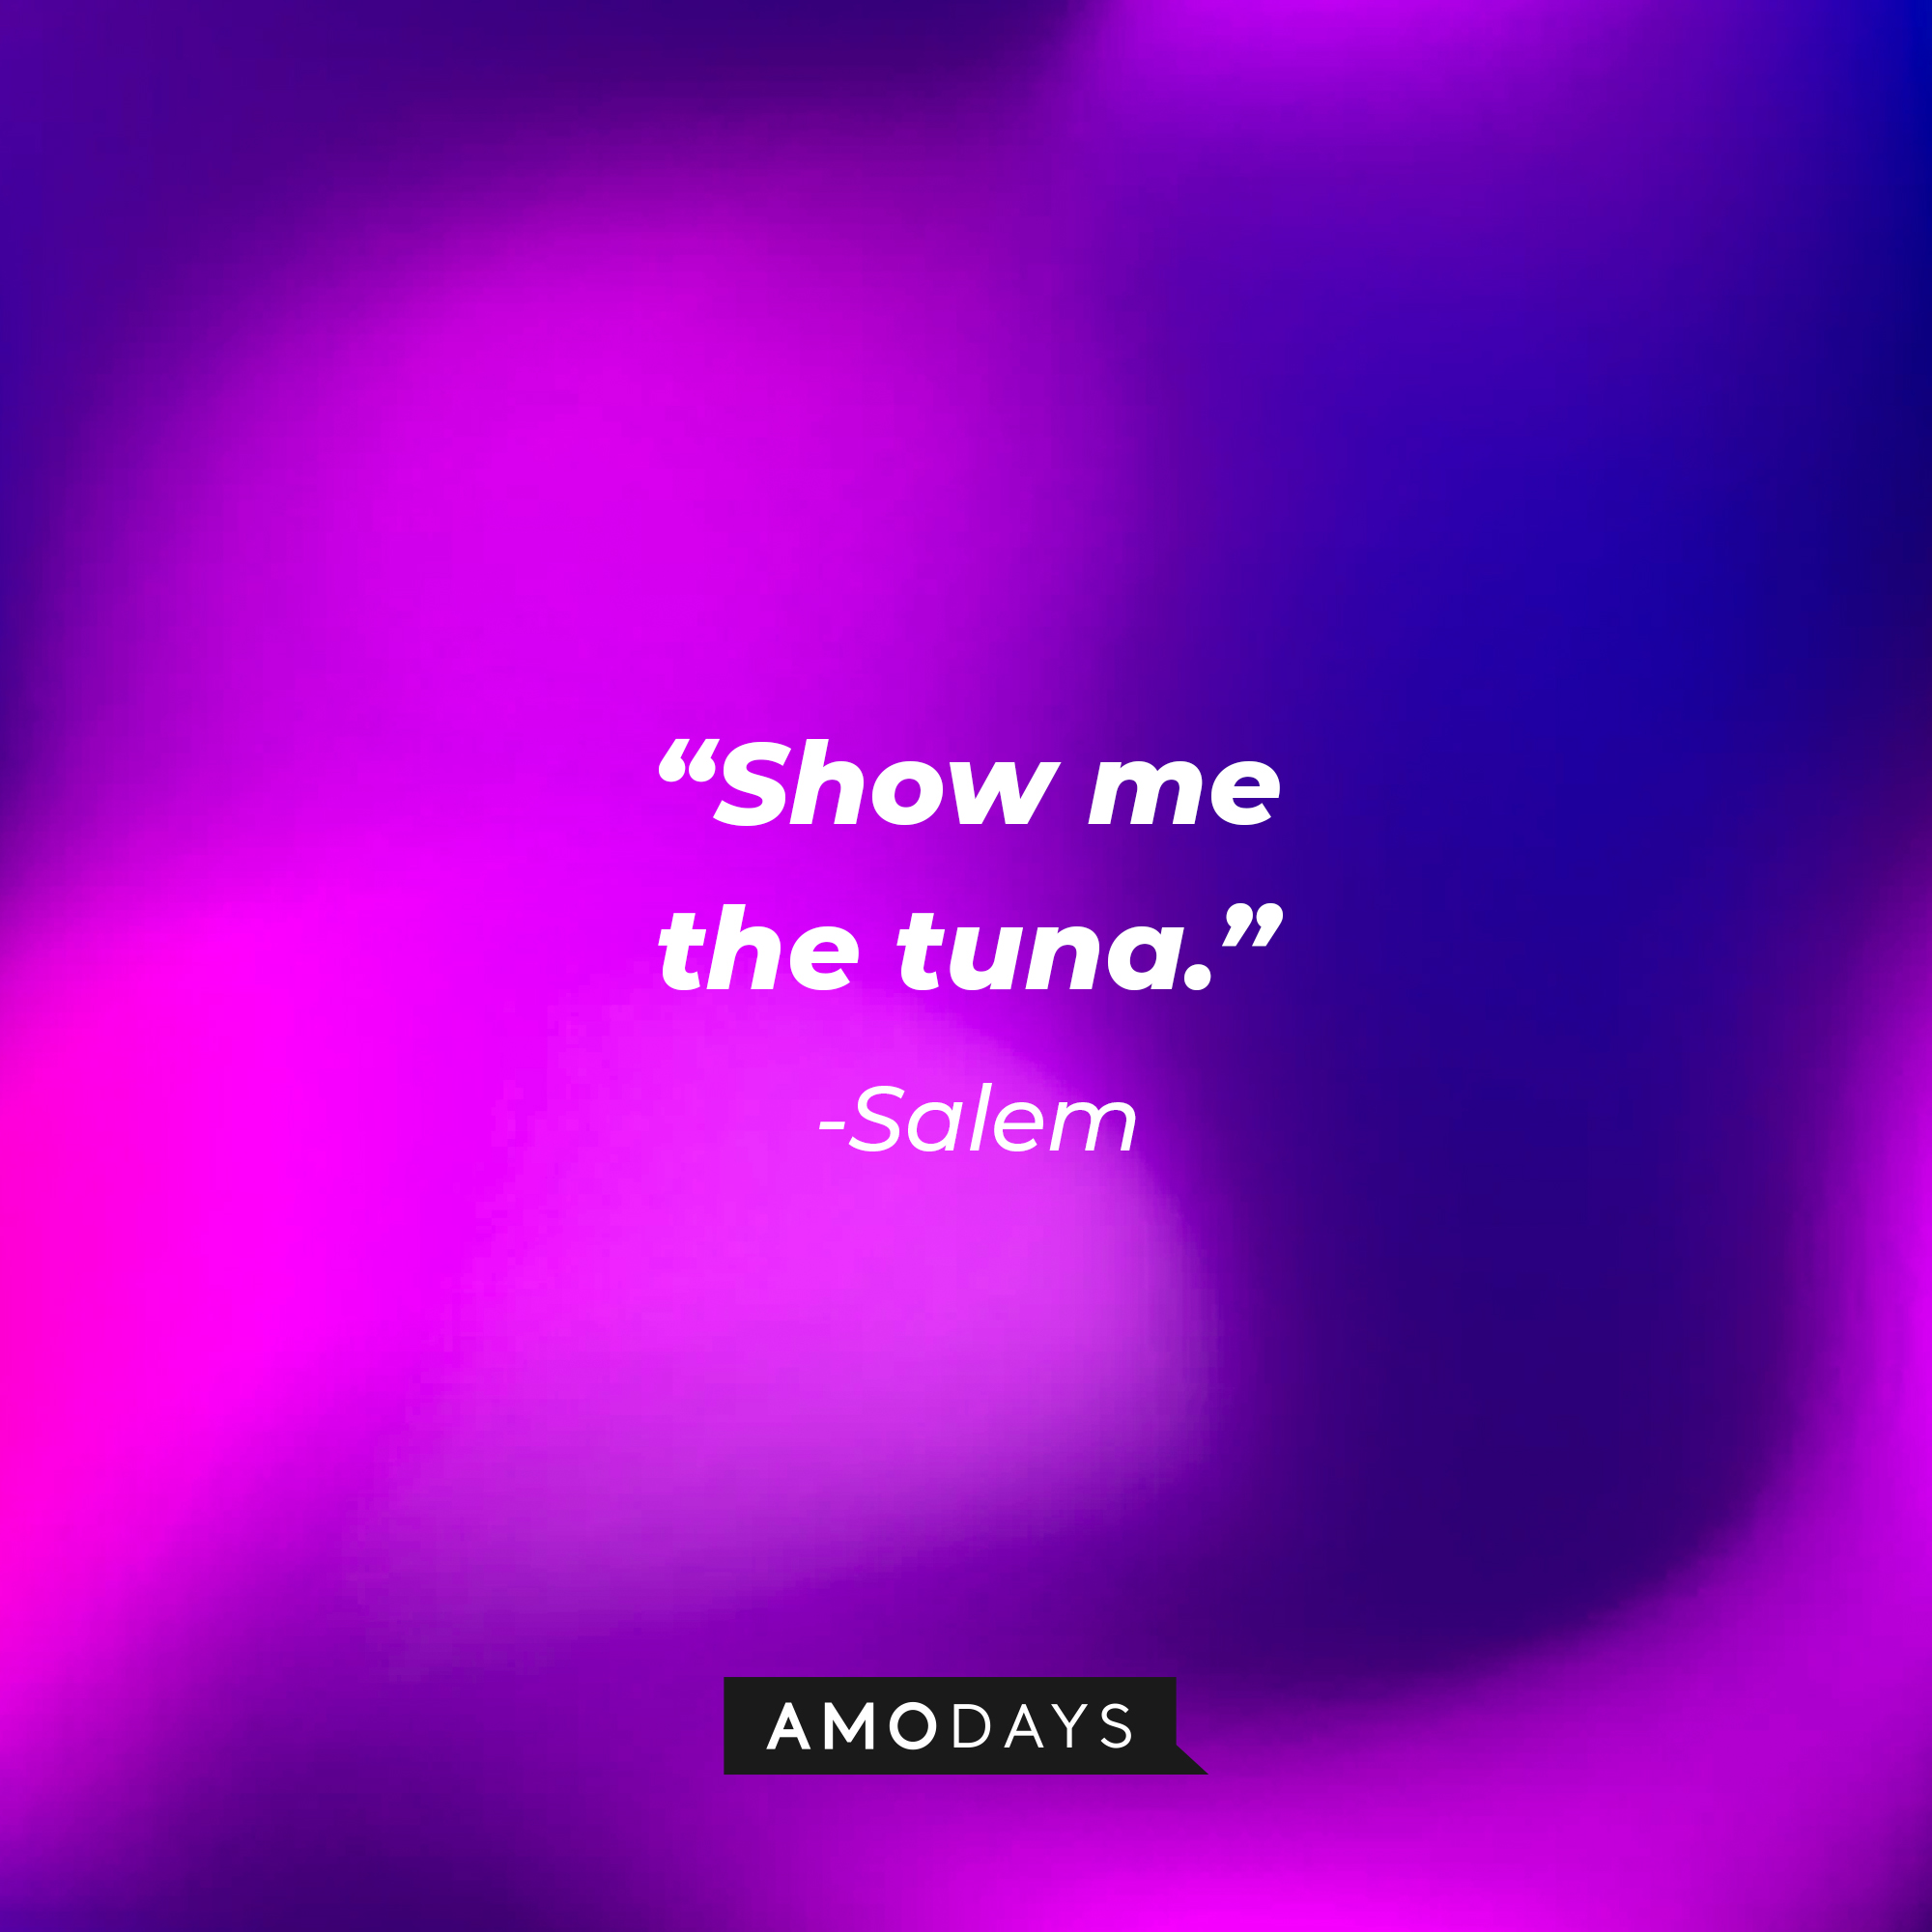 Salem's quote: “Show me the tuna.” | Source: AmoDays